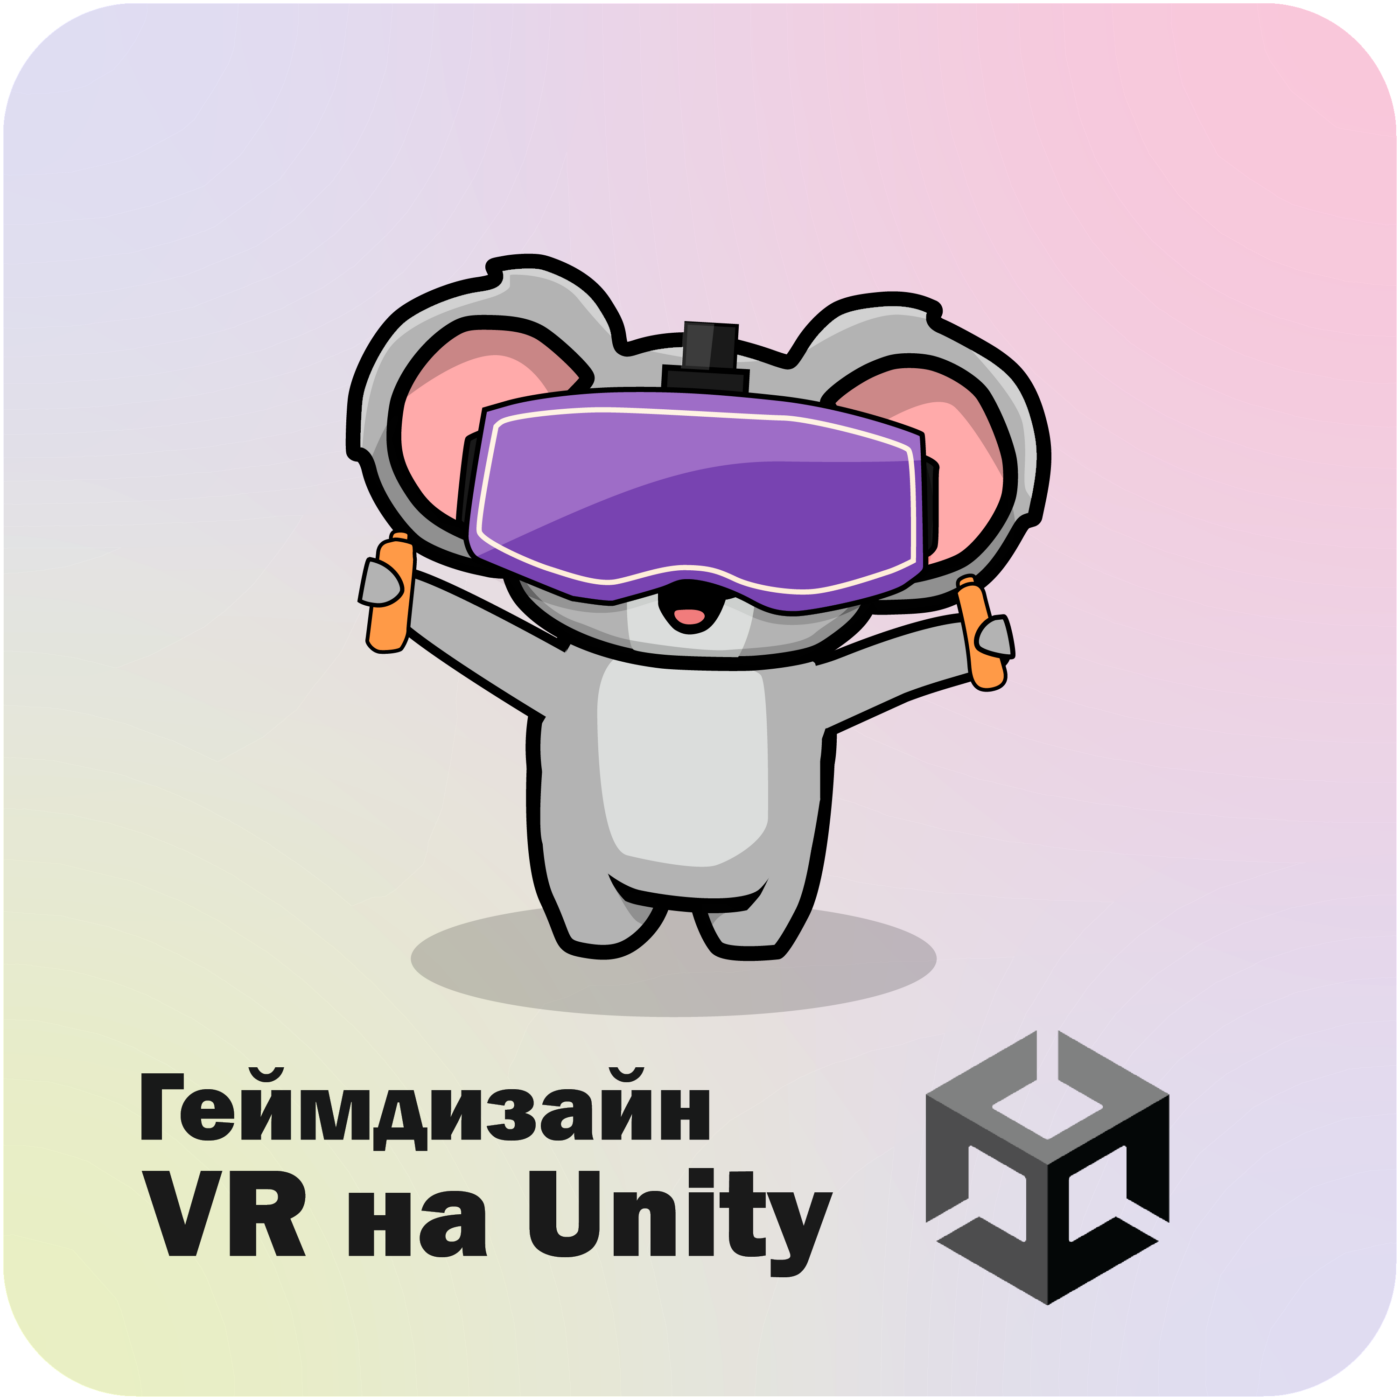 Геймдизайн VR на Unity